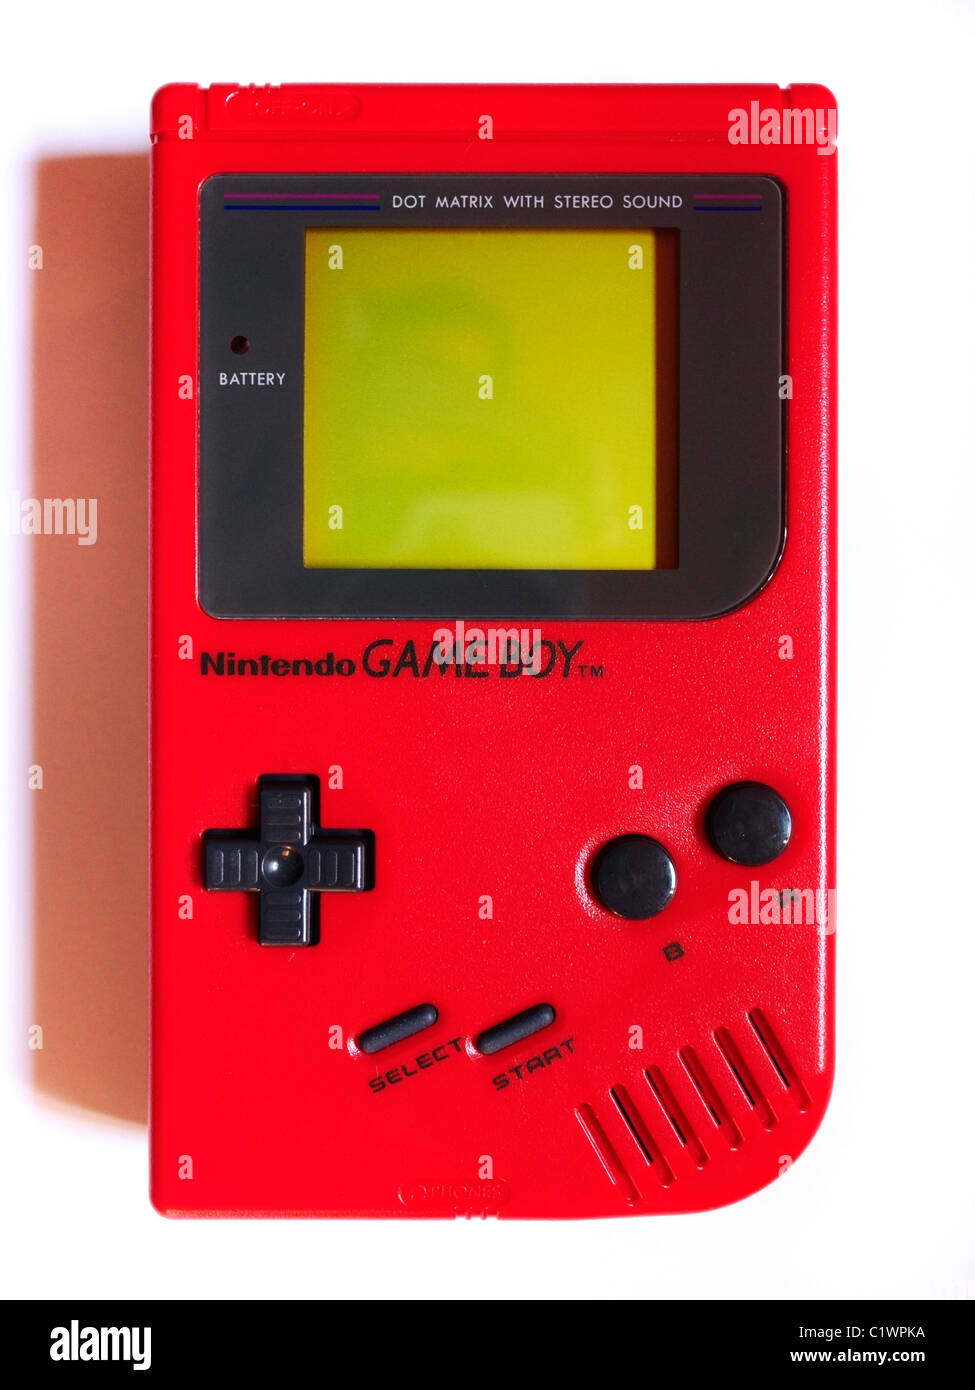 Original Nintendo Gameboy Stock Photo - Alamy